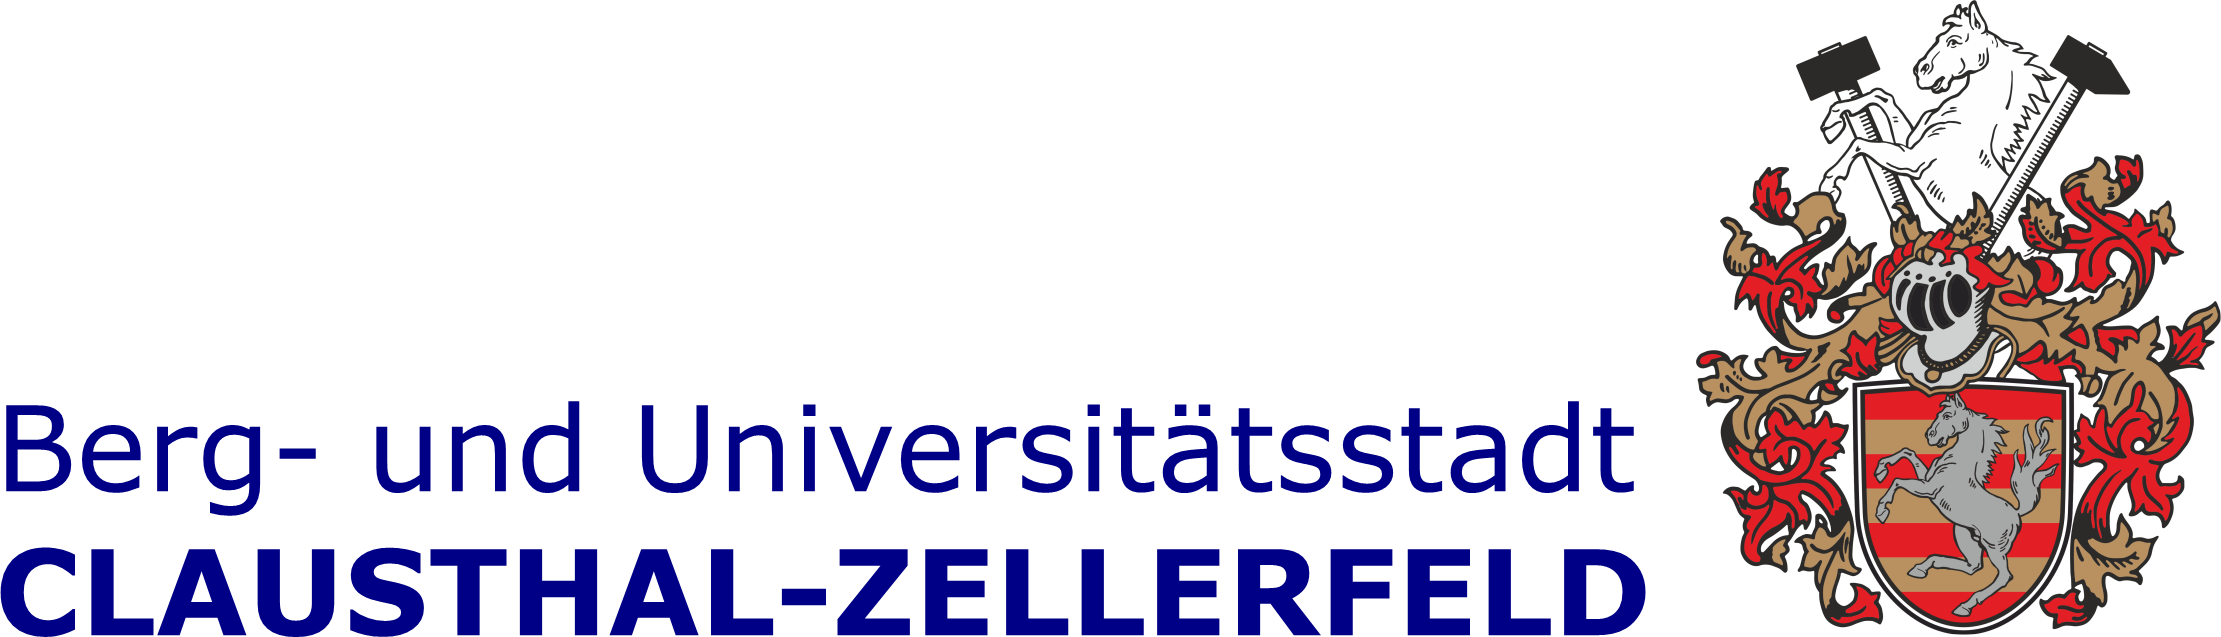 Logo Berg- und Universitätsstadt Clausthal-Zellerfeld